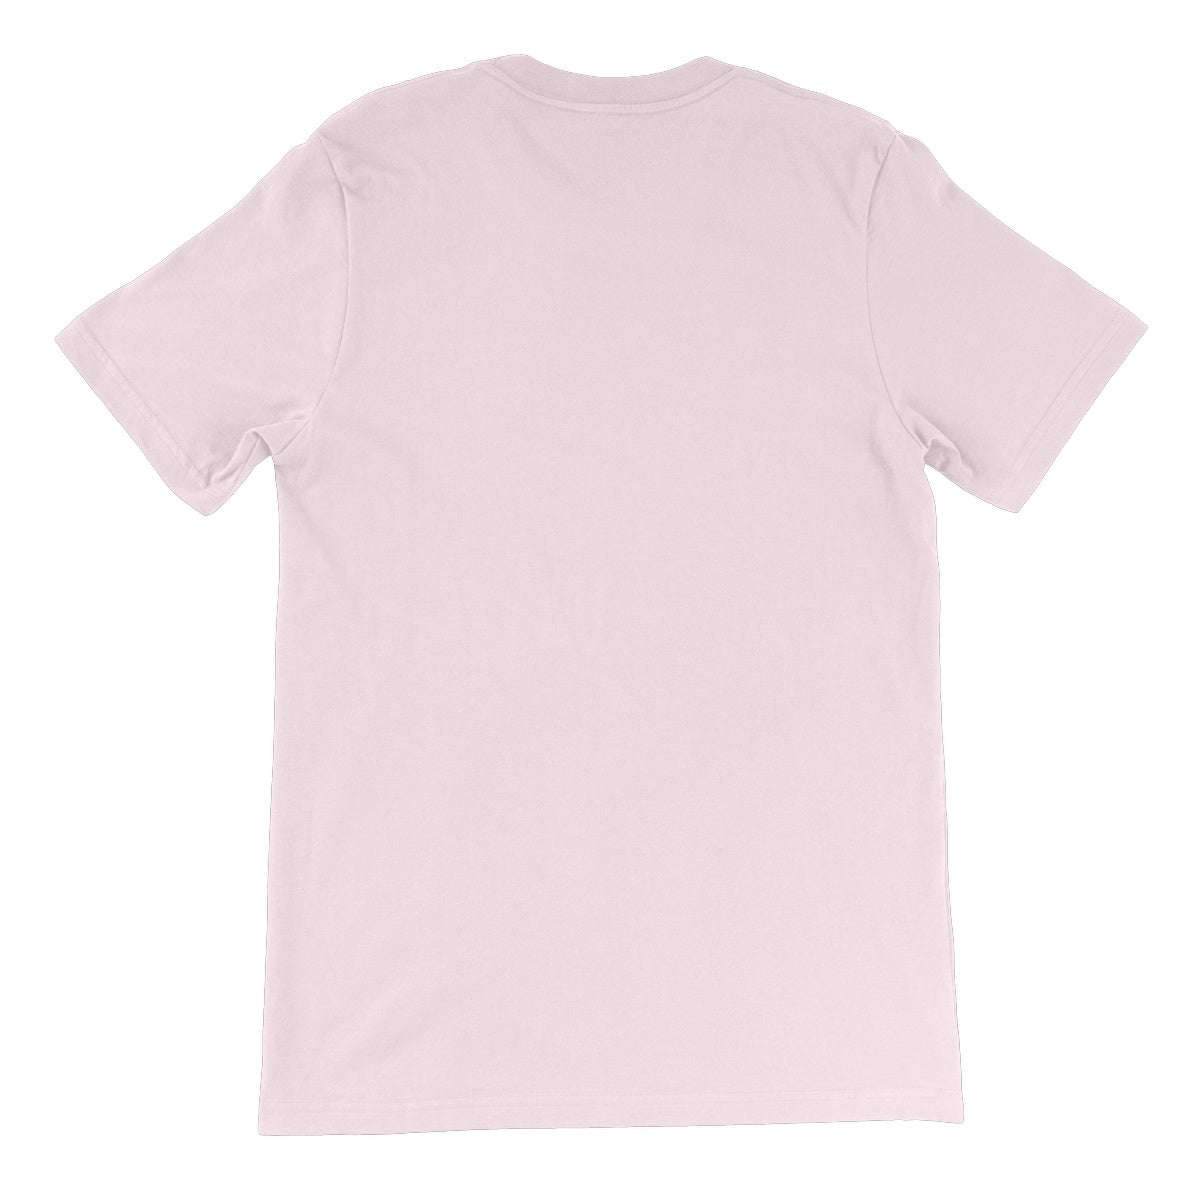 Möbius Flow, Dawn Sphere Unisex Short Sleeve T-Shirt